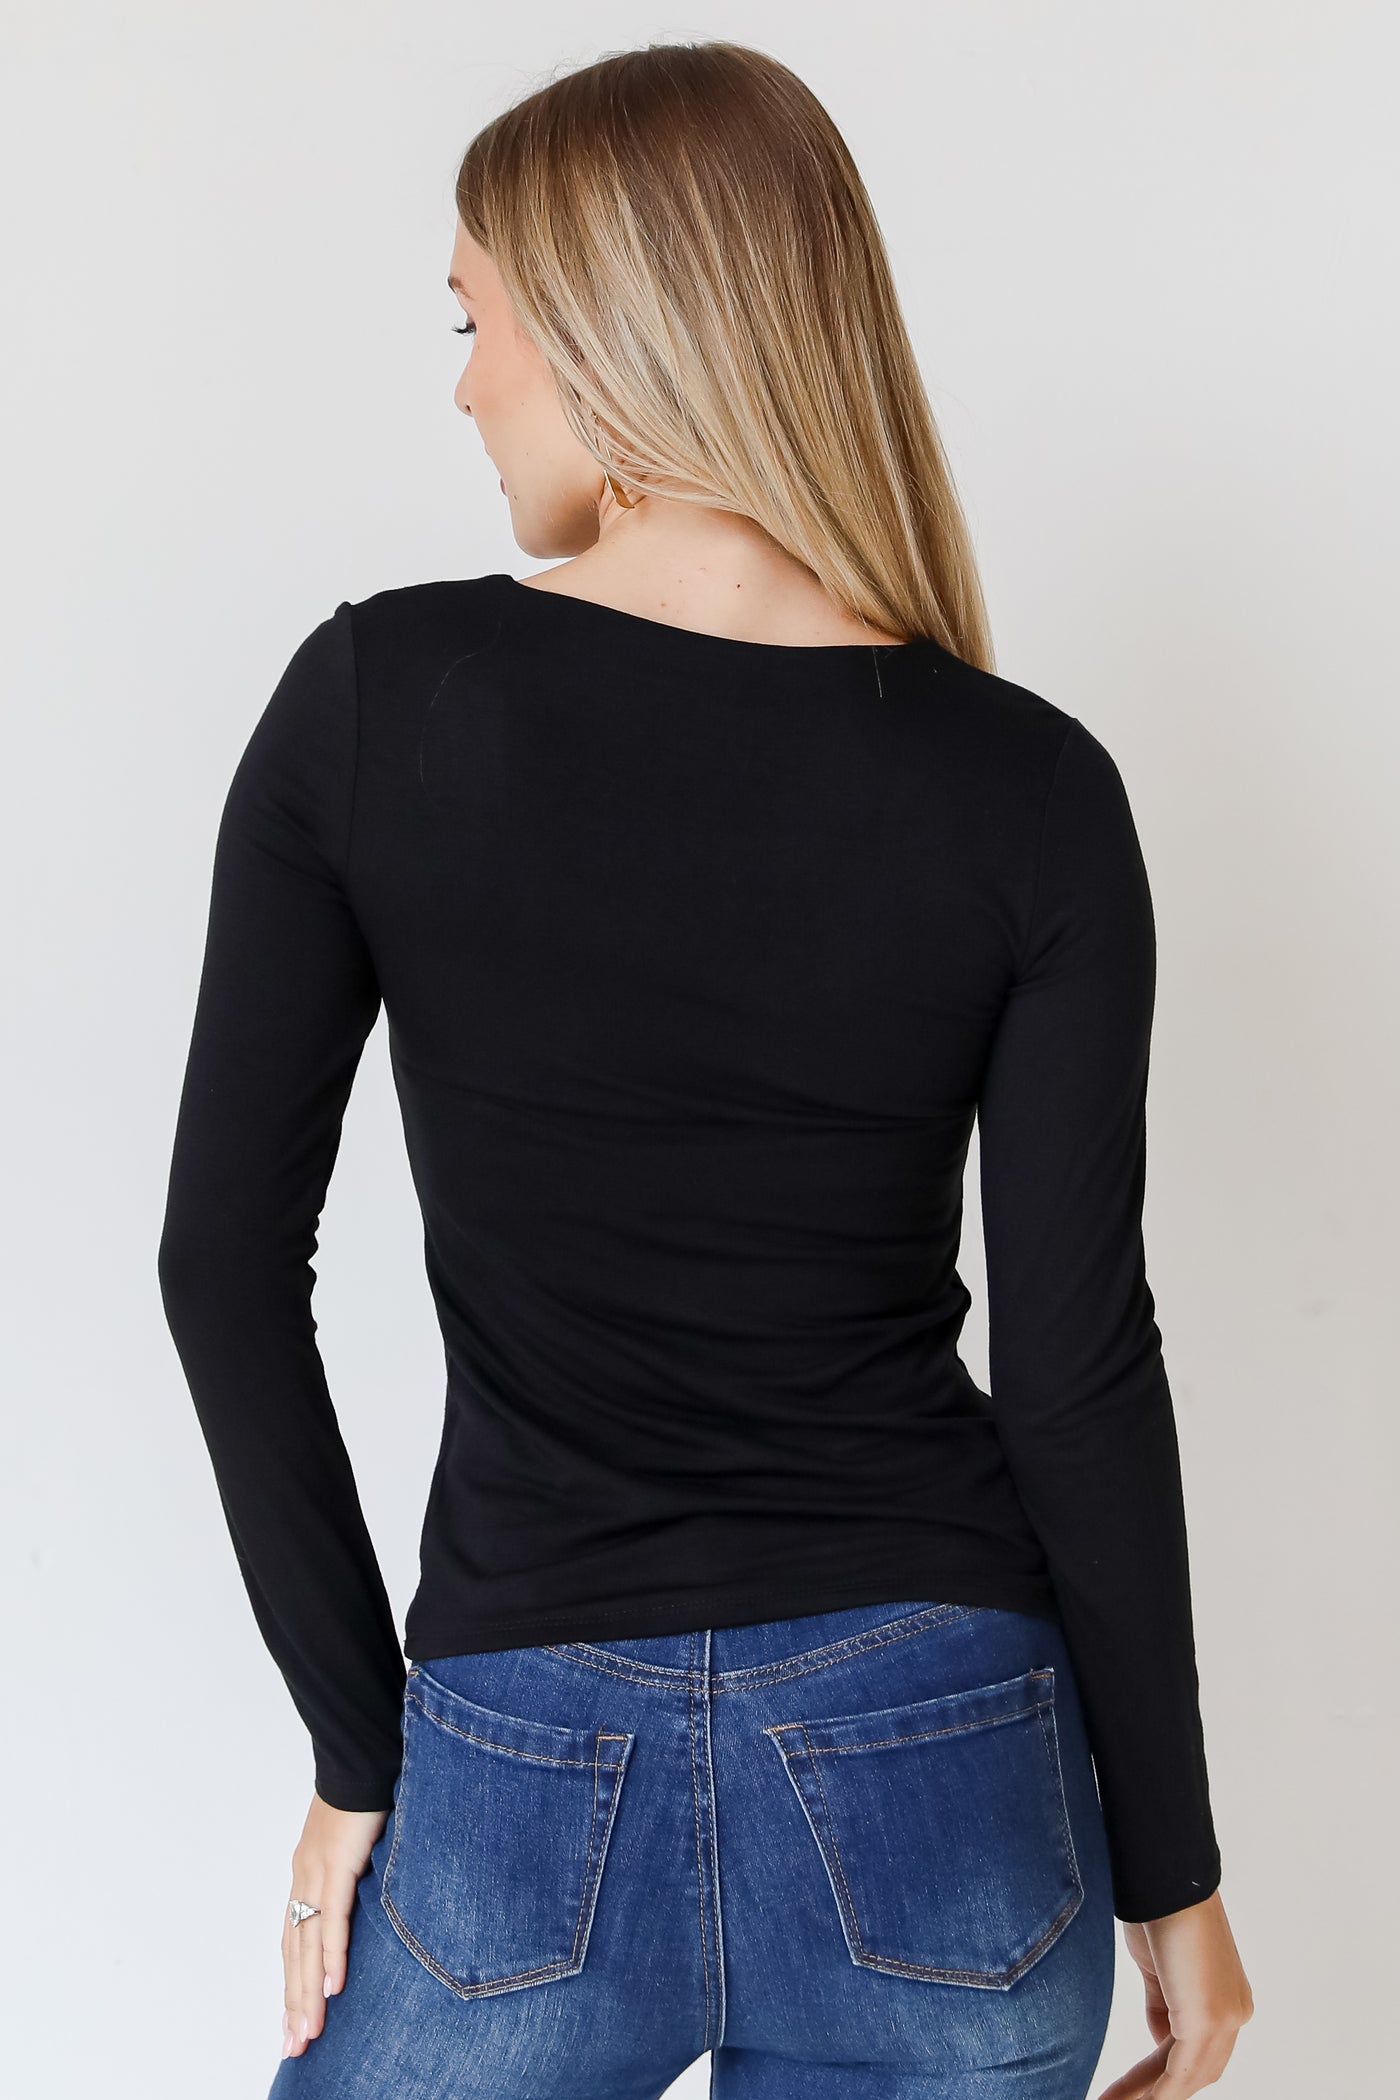 black Long Sleeve Top back view